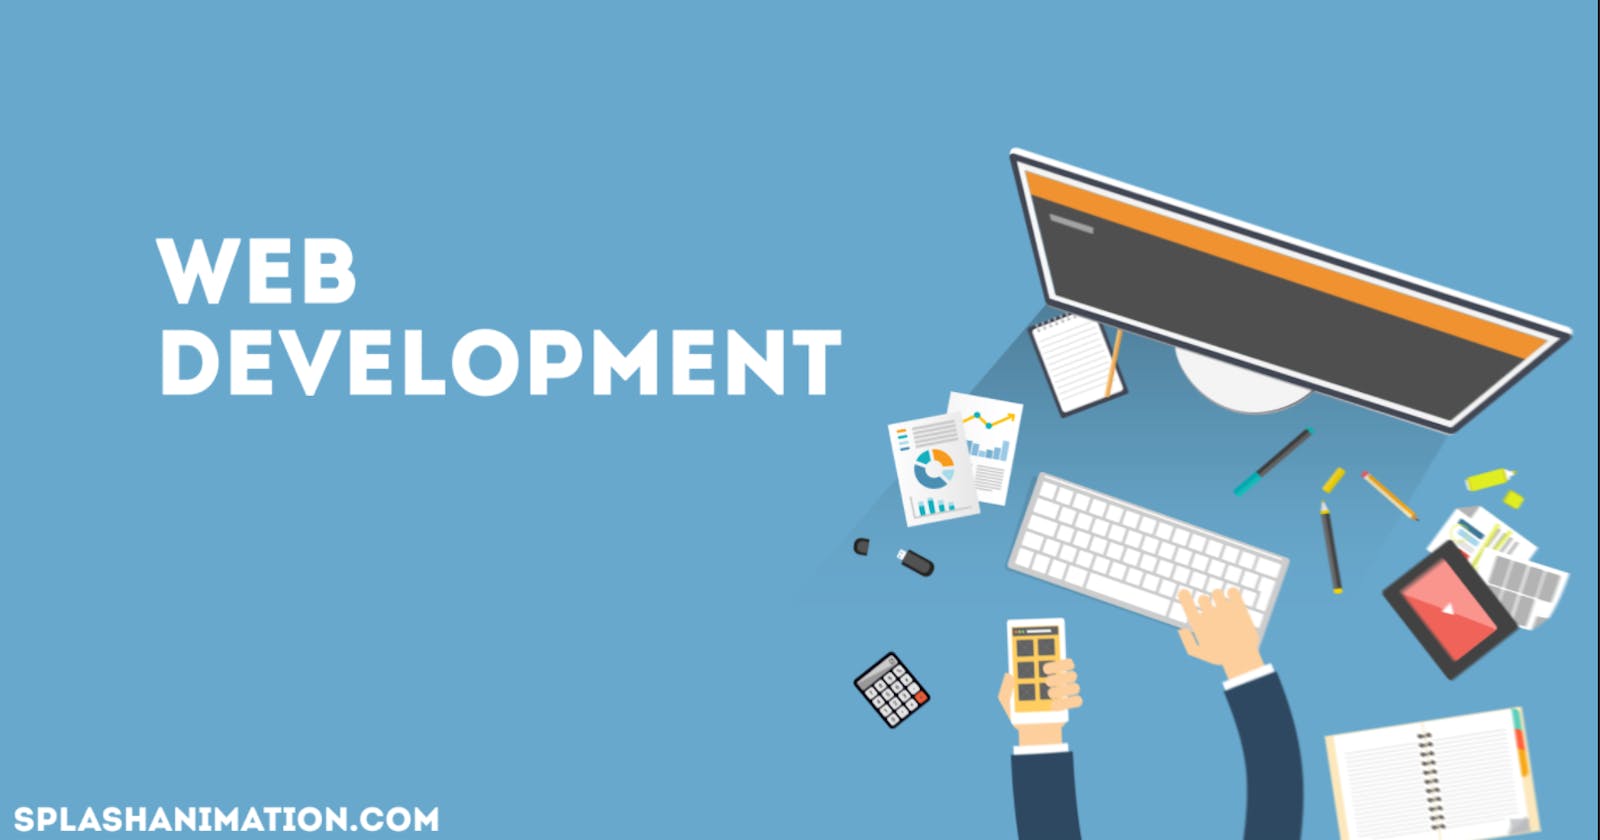 Getting started in Web Development